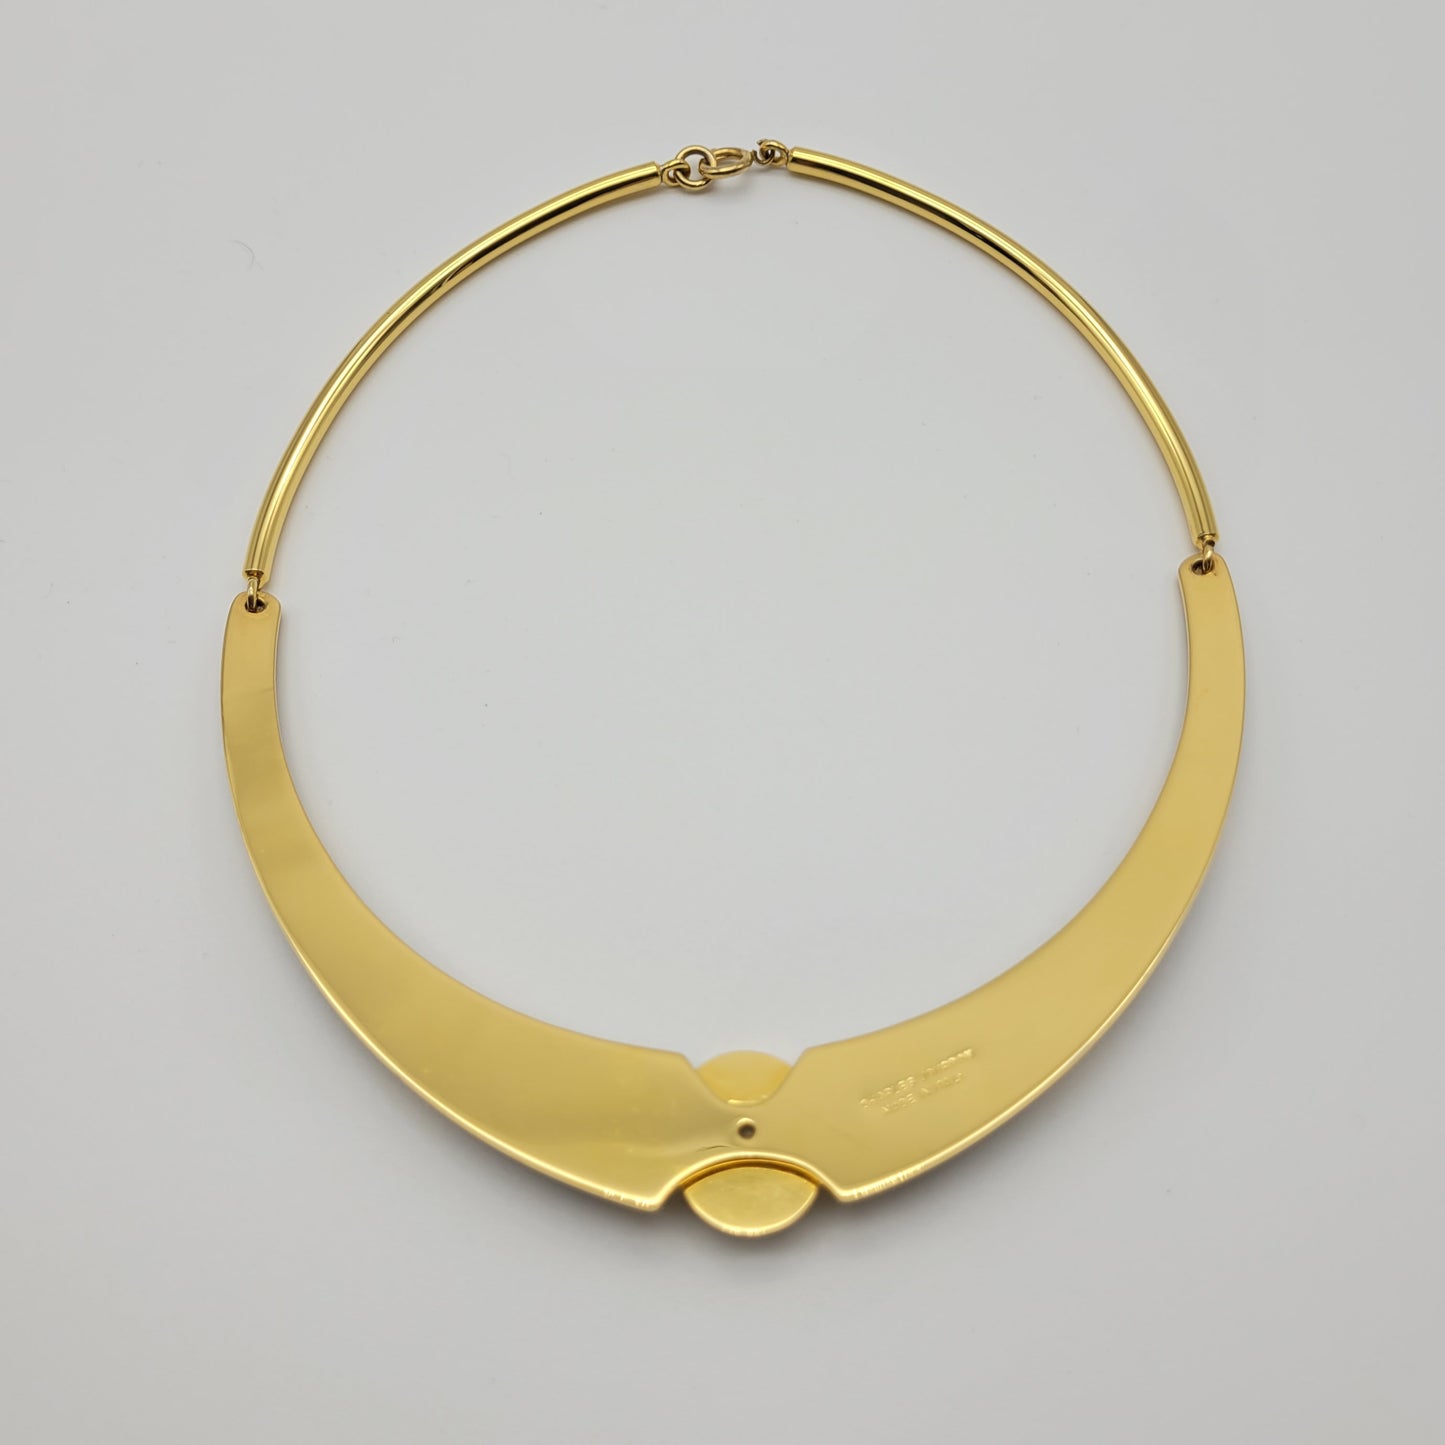 Vintage collar necklace Charles Jourdan